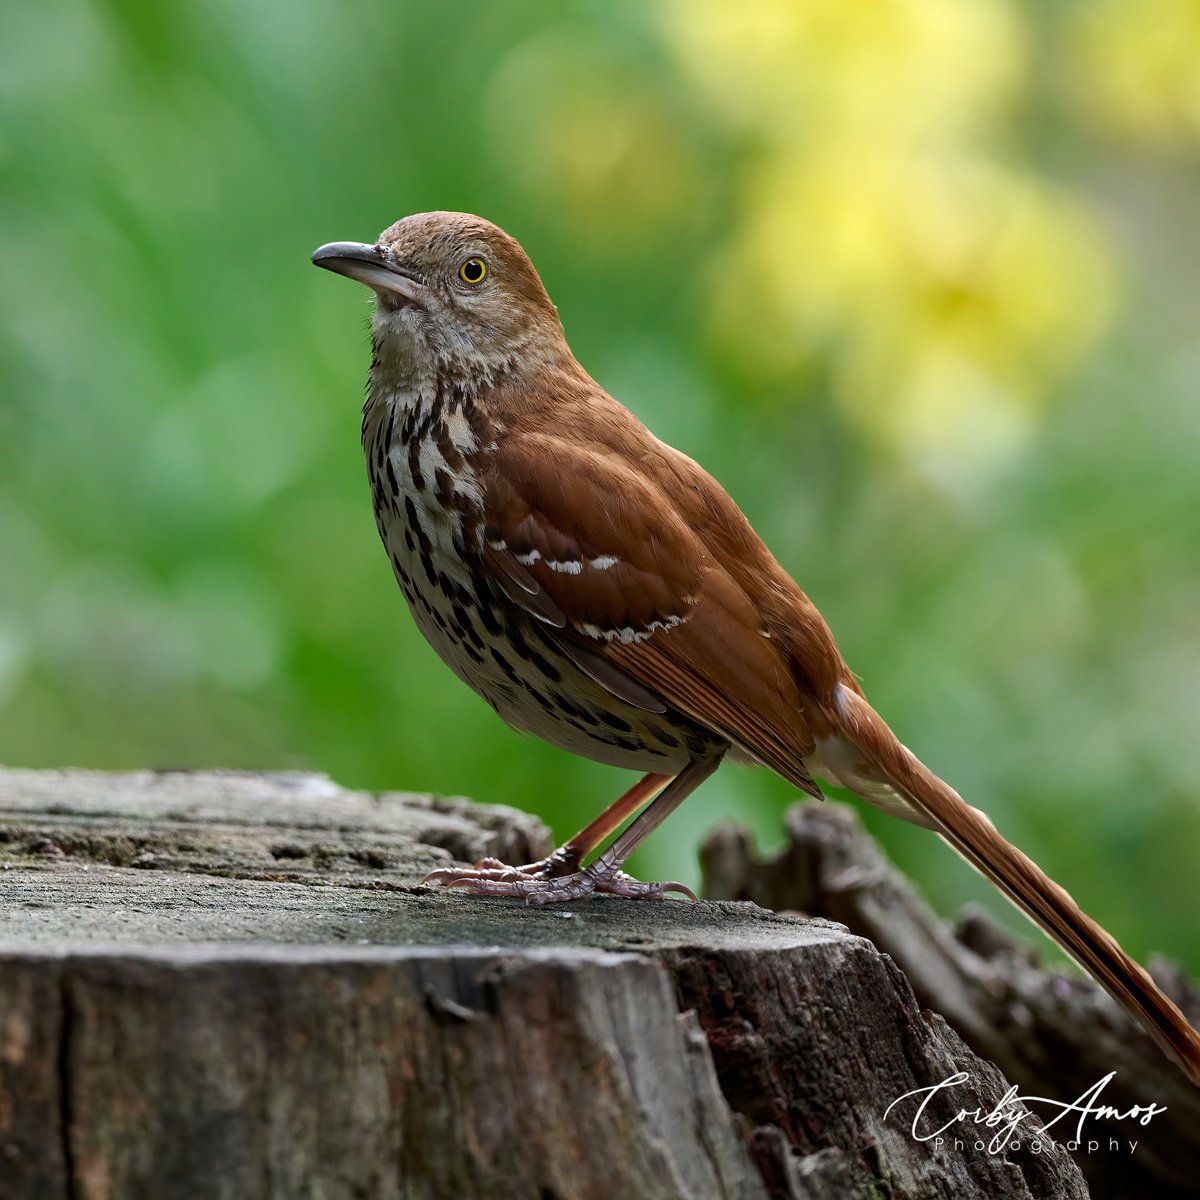 Brown Thrasher
.
linktr.ee/corbyamos
.
#birdphotography #birdwatching #birding #BirdTwitter #twitterbirds #birdpics